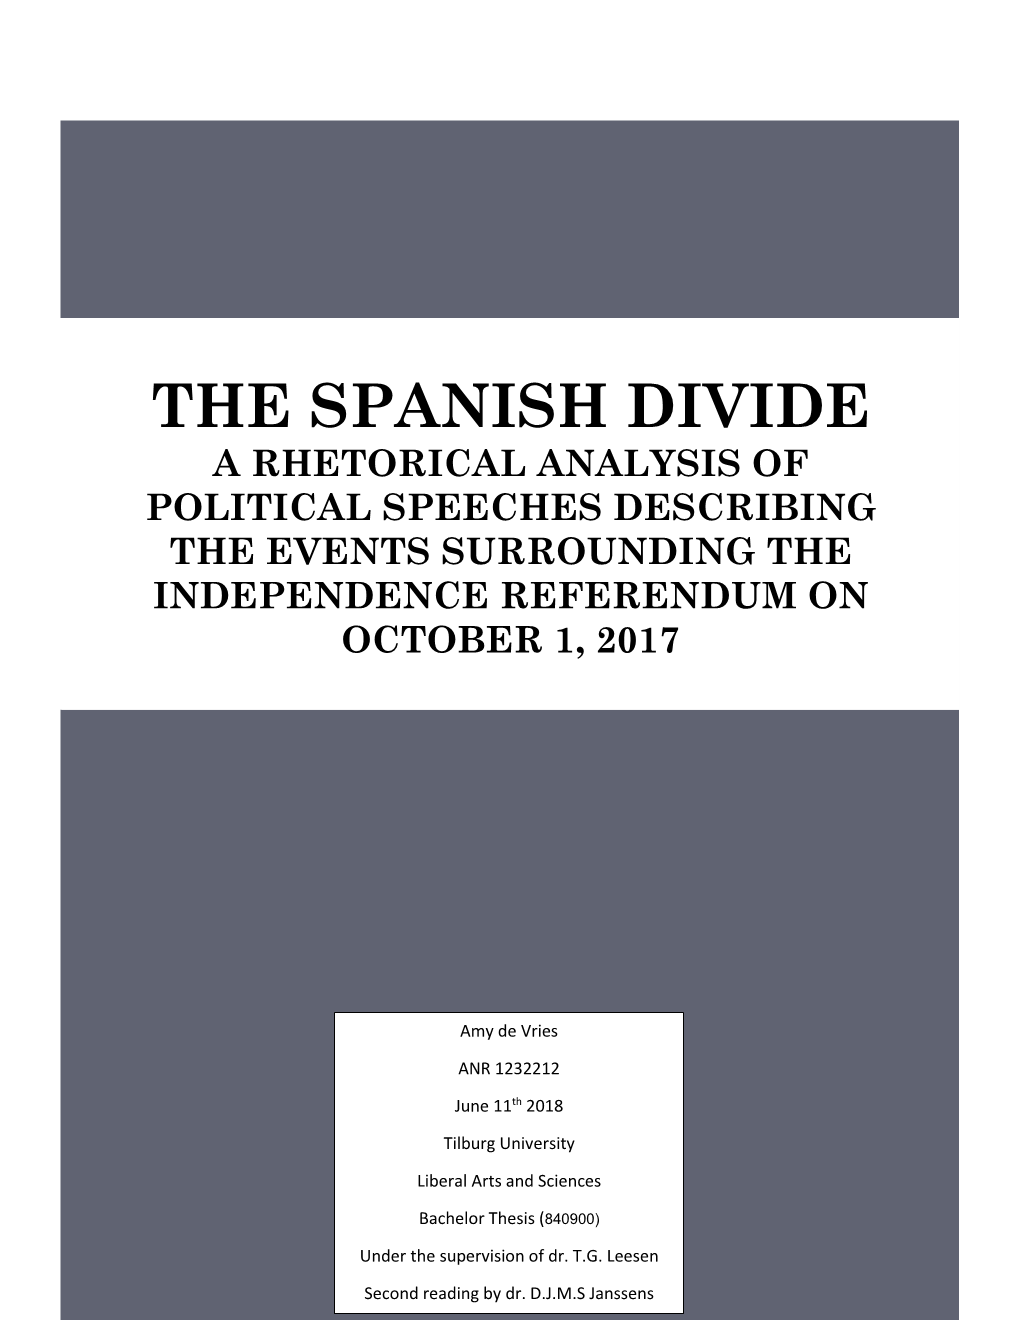 The Spanish Divide: a Rhetorical Analysis of Political Speeches